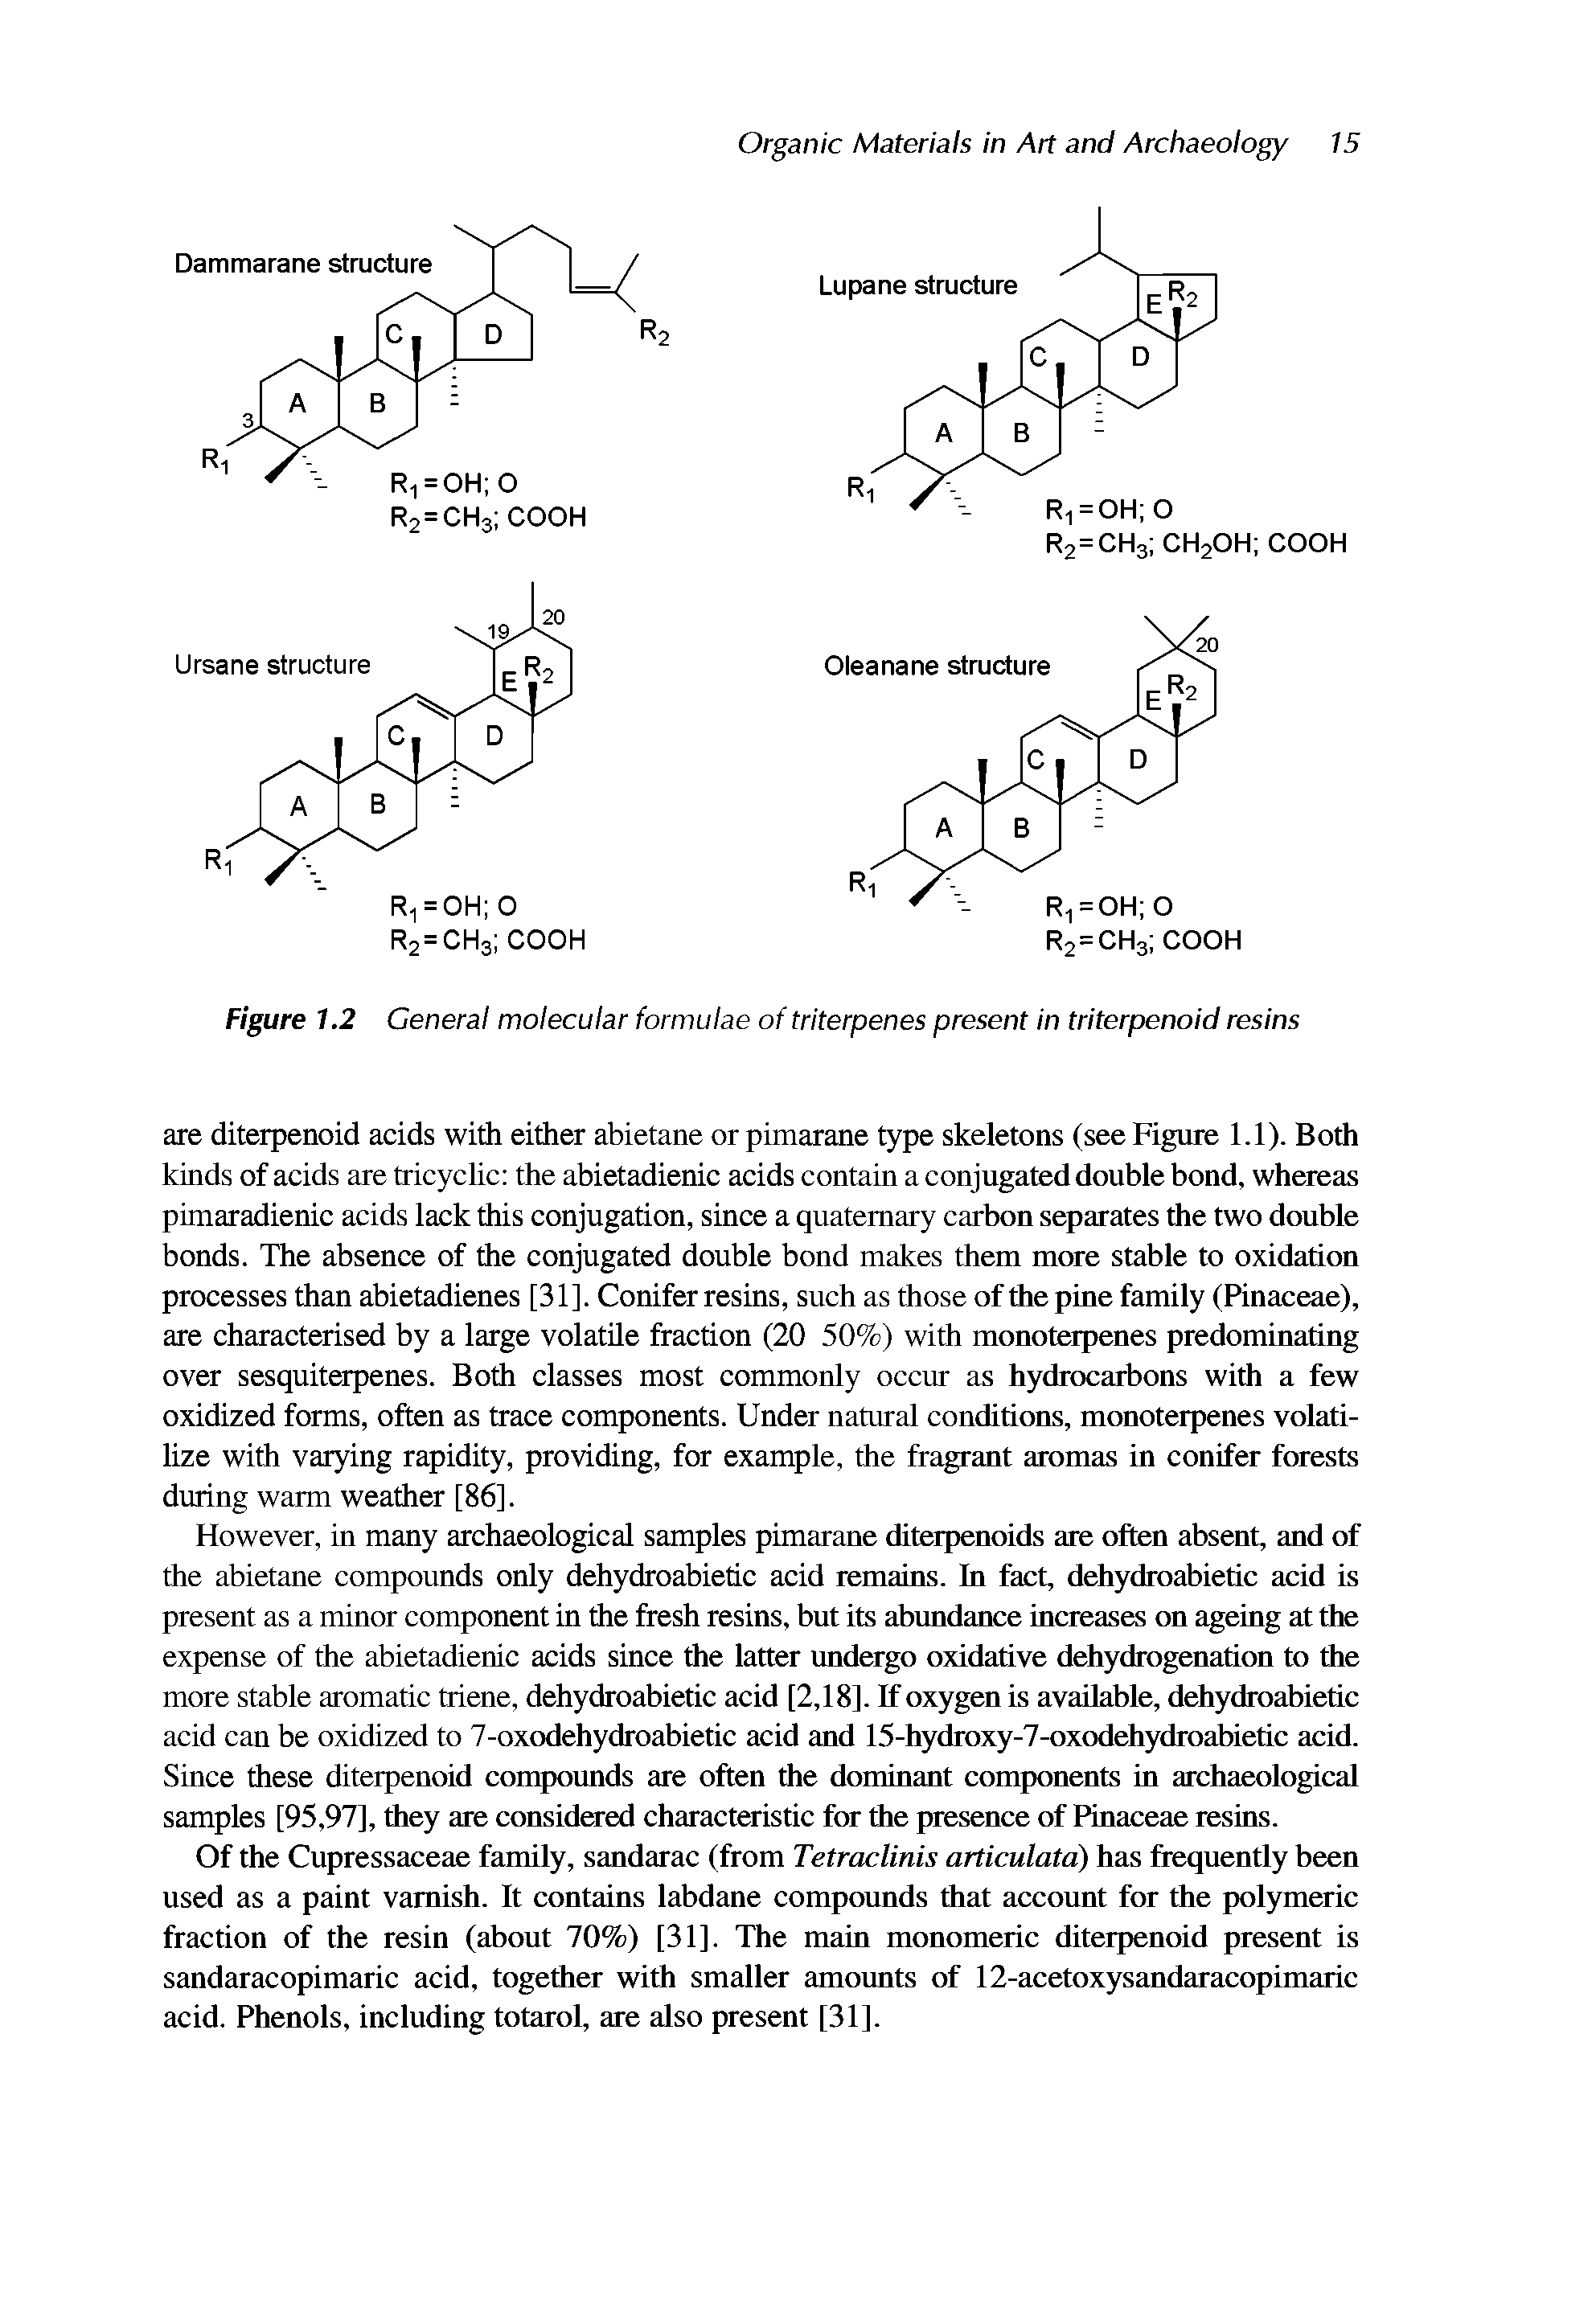 Figure 1.2 General molecular formulae of triterpenes present in triterpenoid resins...